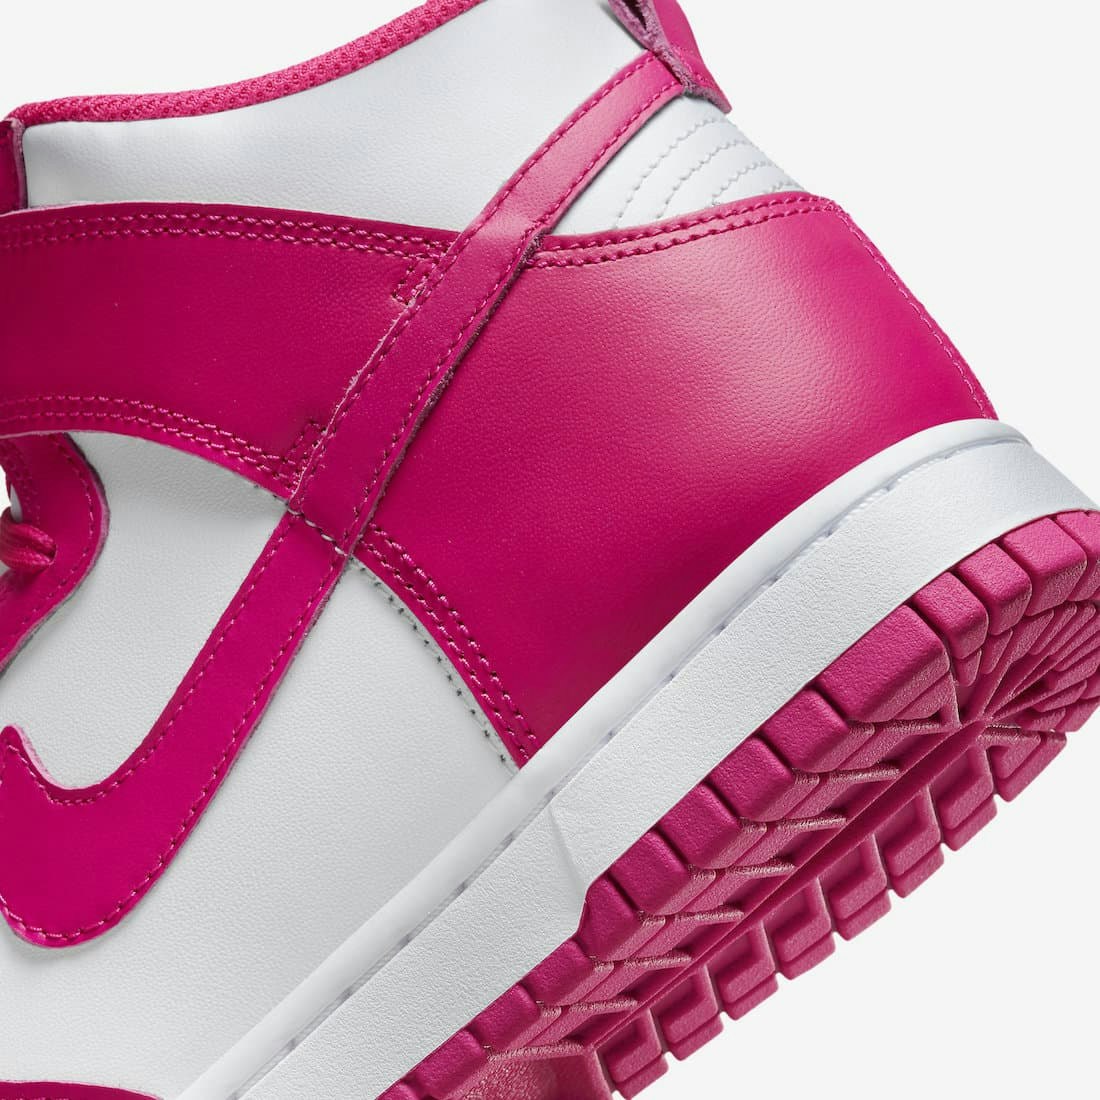 Nike Dunk High “Pink Prime”